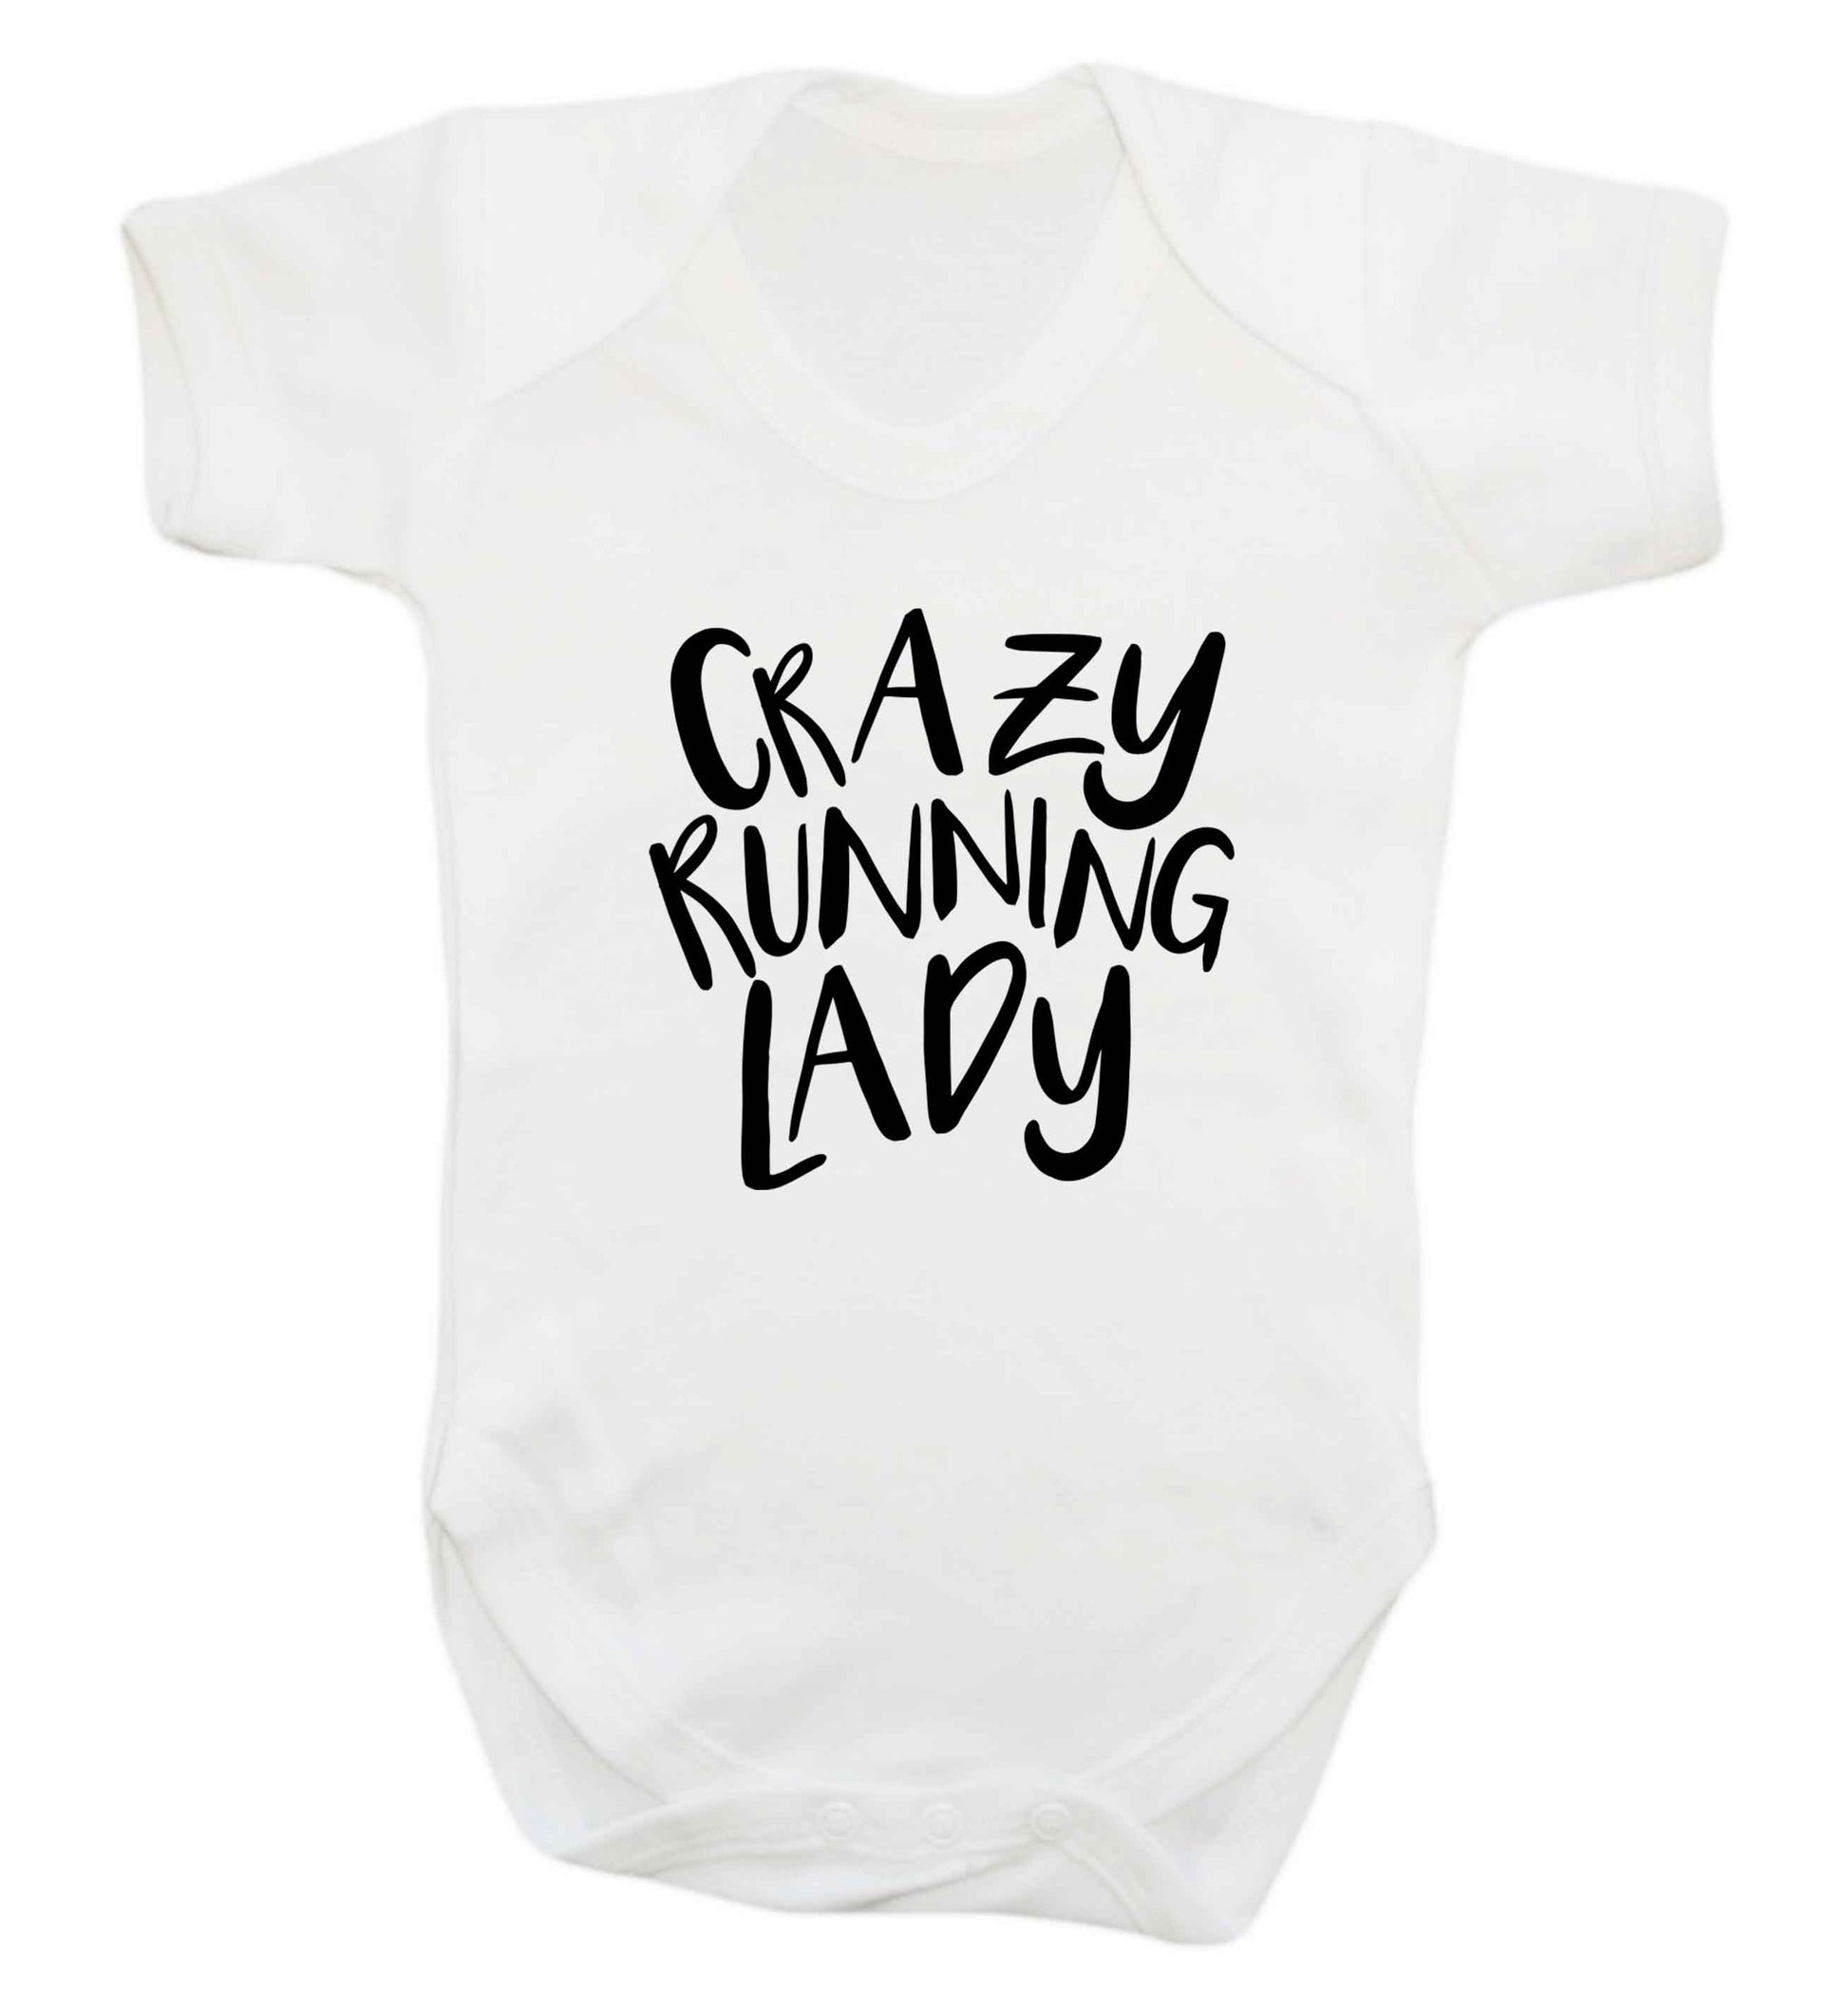 Crazy running lady baby vest white 18-24 months